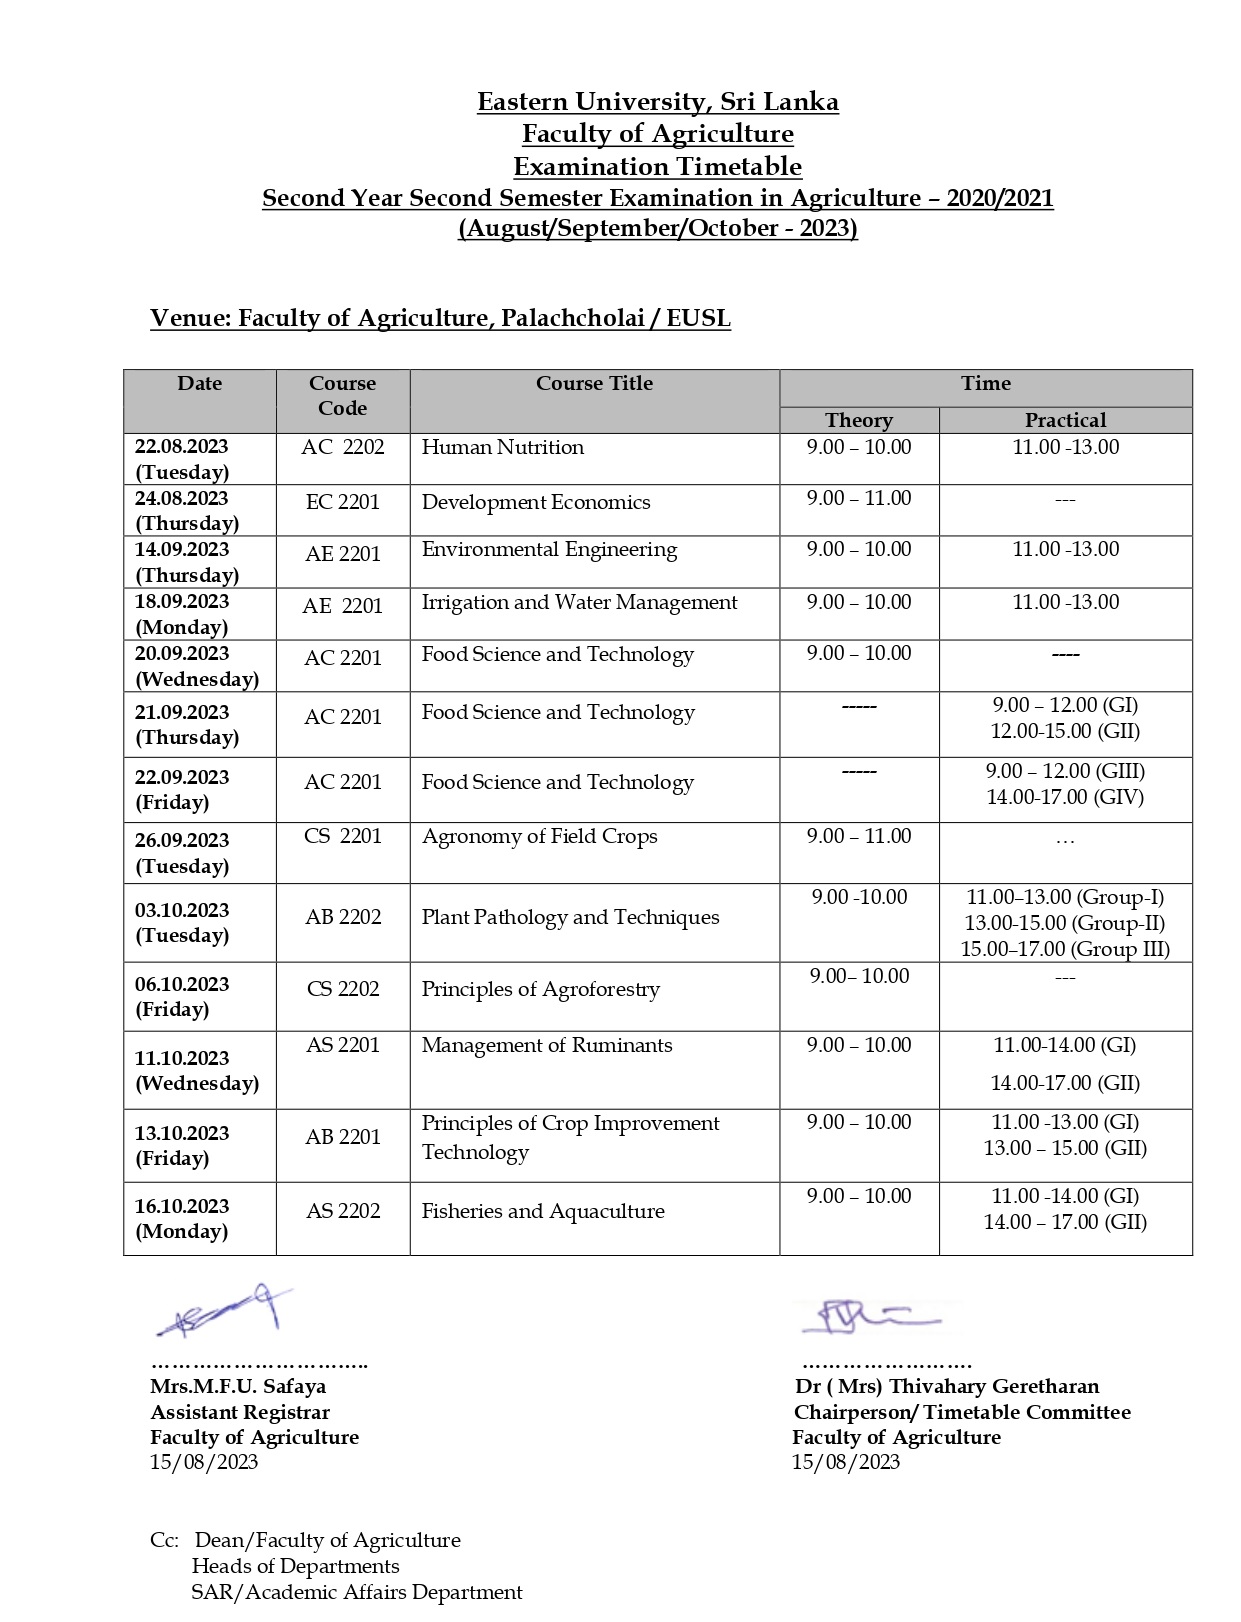 Exam Timetable_Second Year Second Semetser_ 202021_Final.jpg